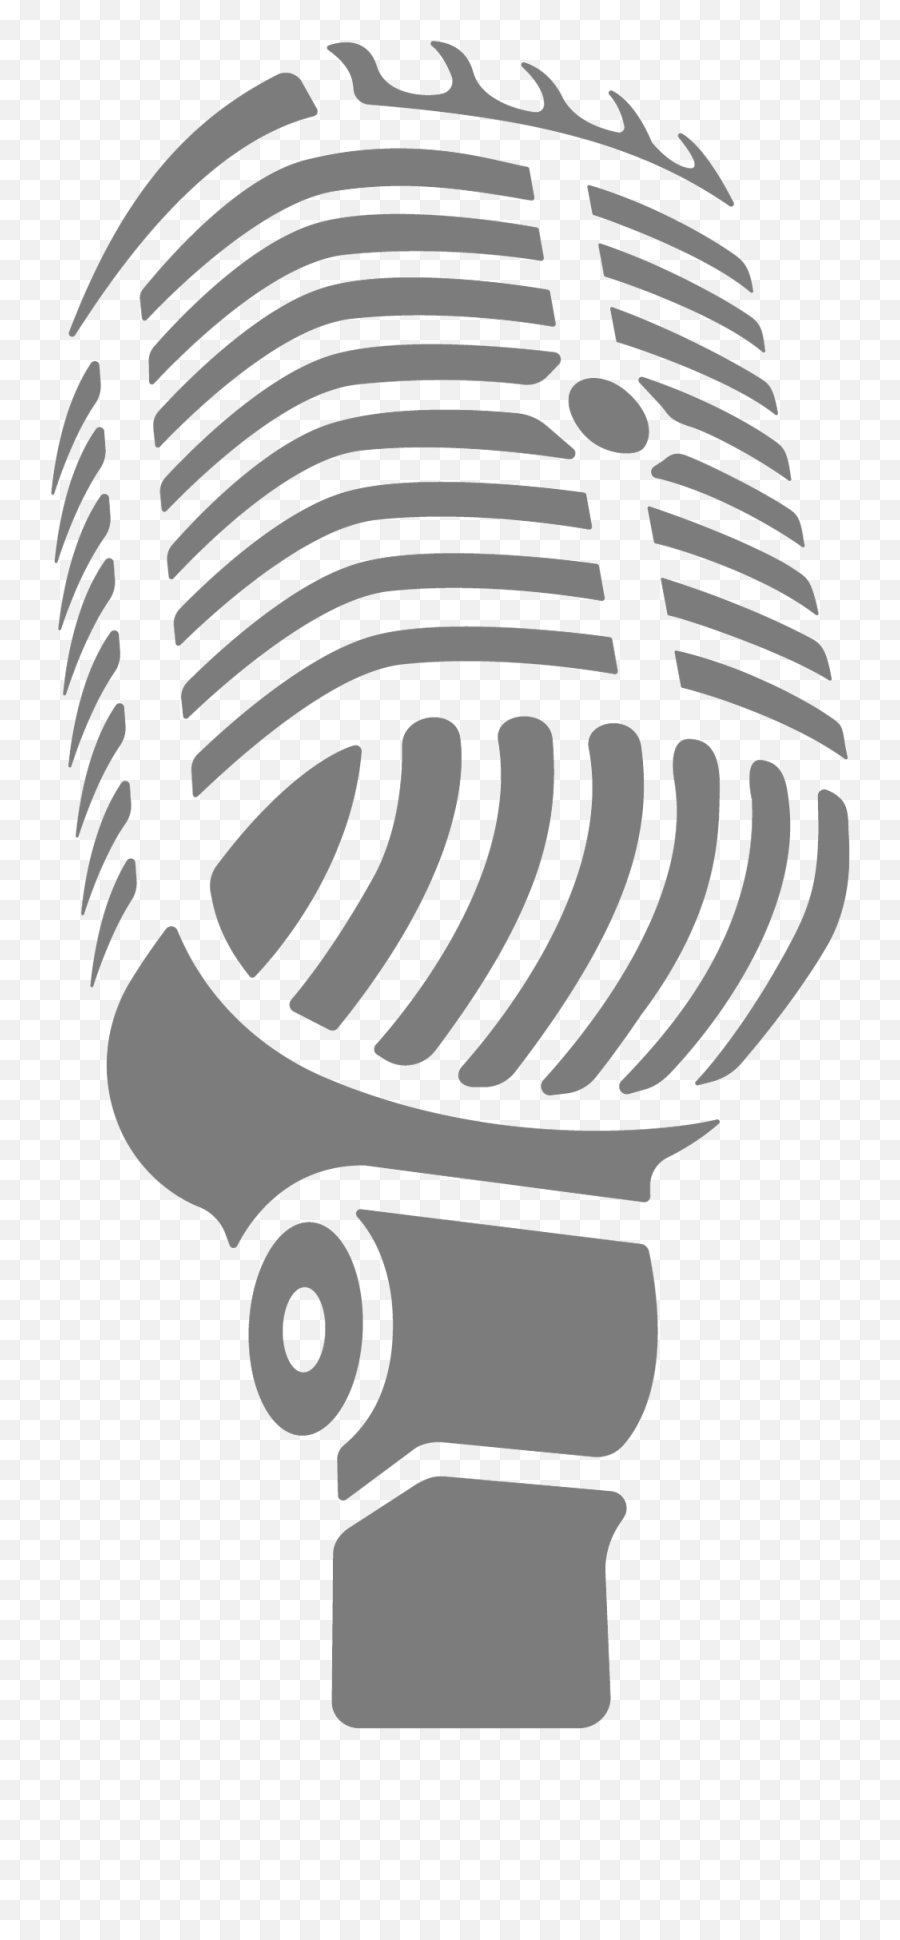 Download Hd Logos And Textures Mic - Recording Studio Logo Png,Microphone Logo